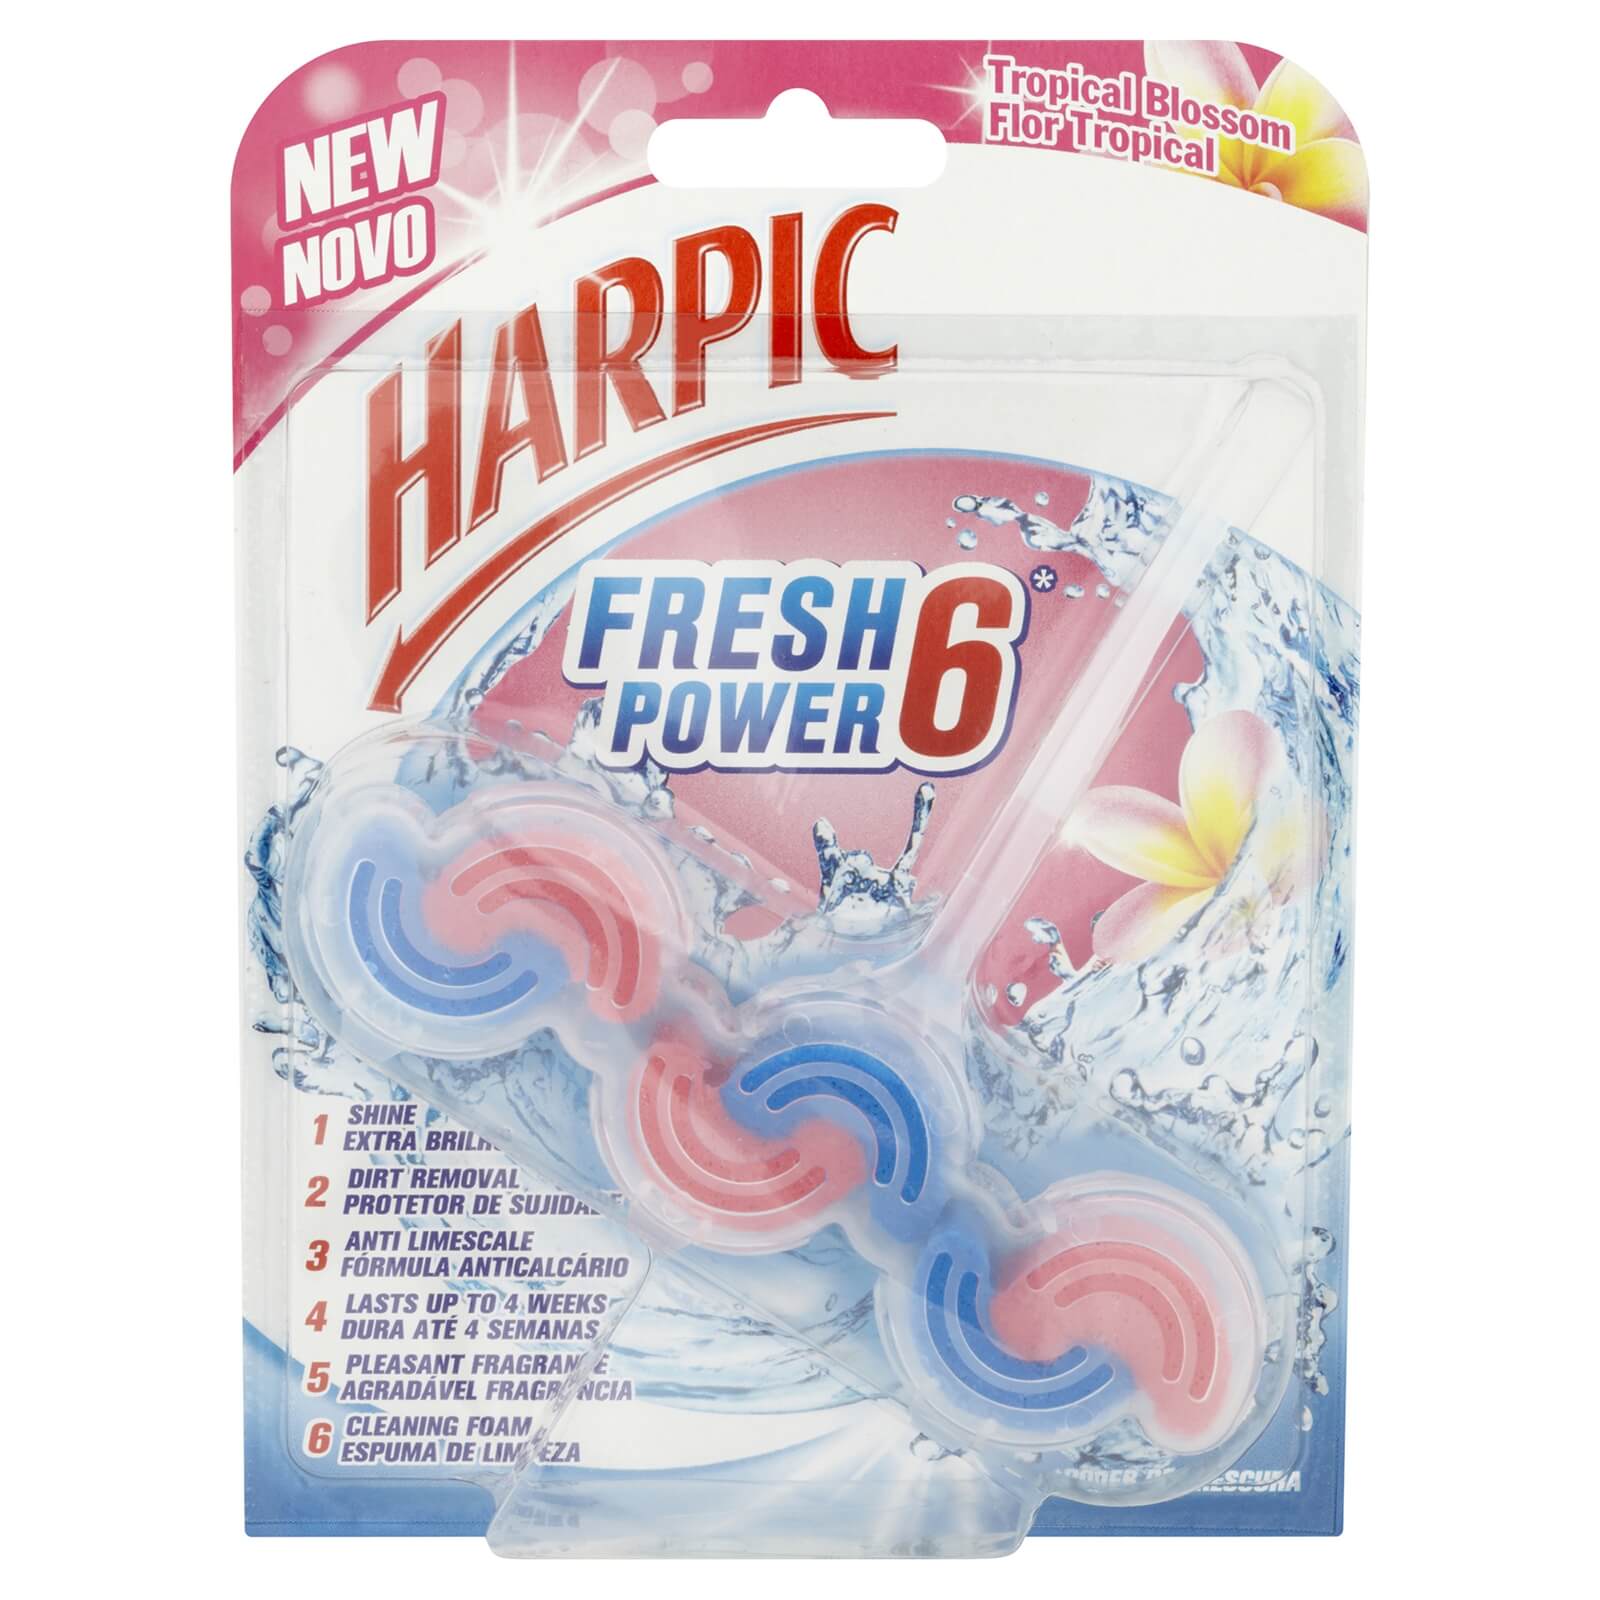 Harpic Fresh Power - Tropical Blossom